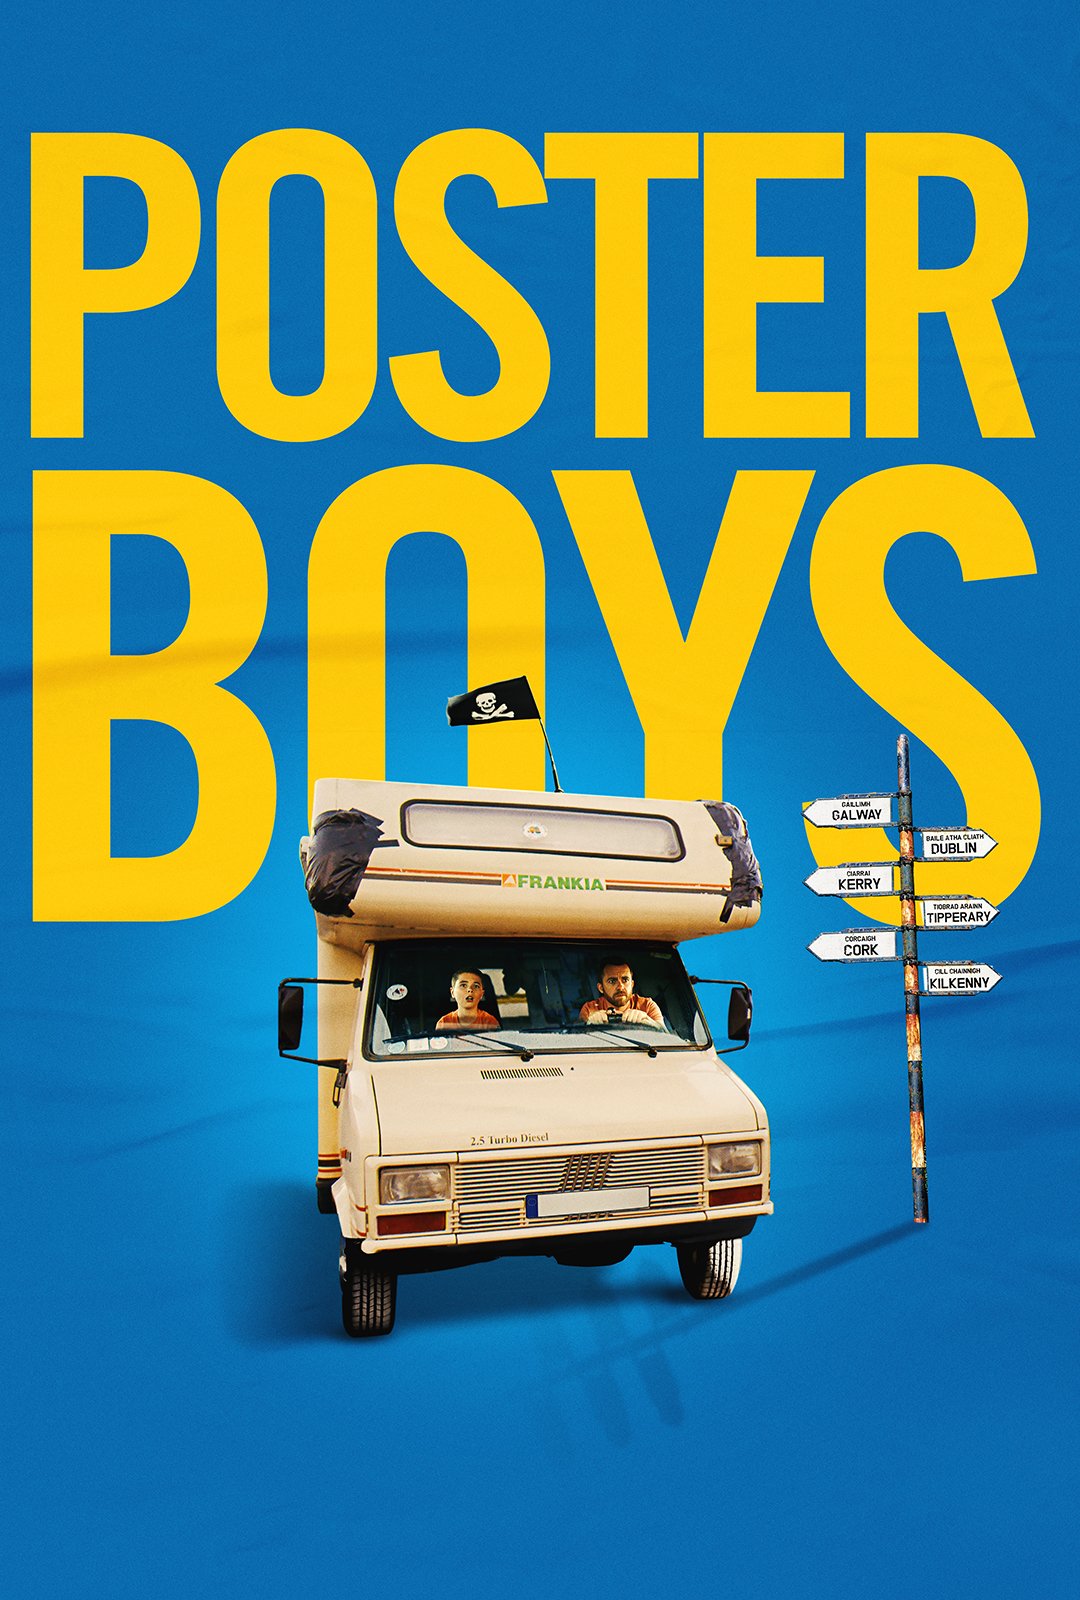 Poster Boys (2020)